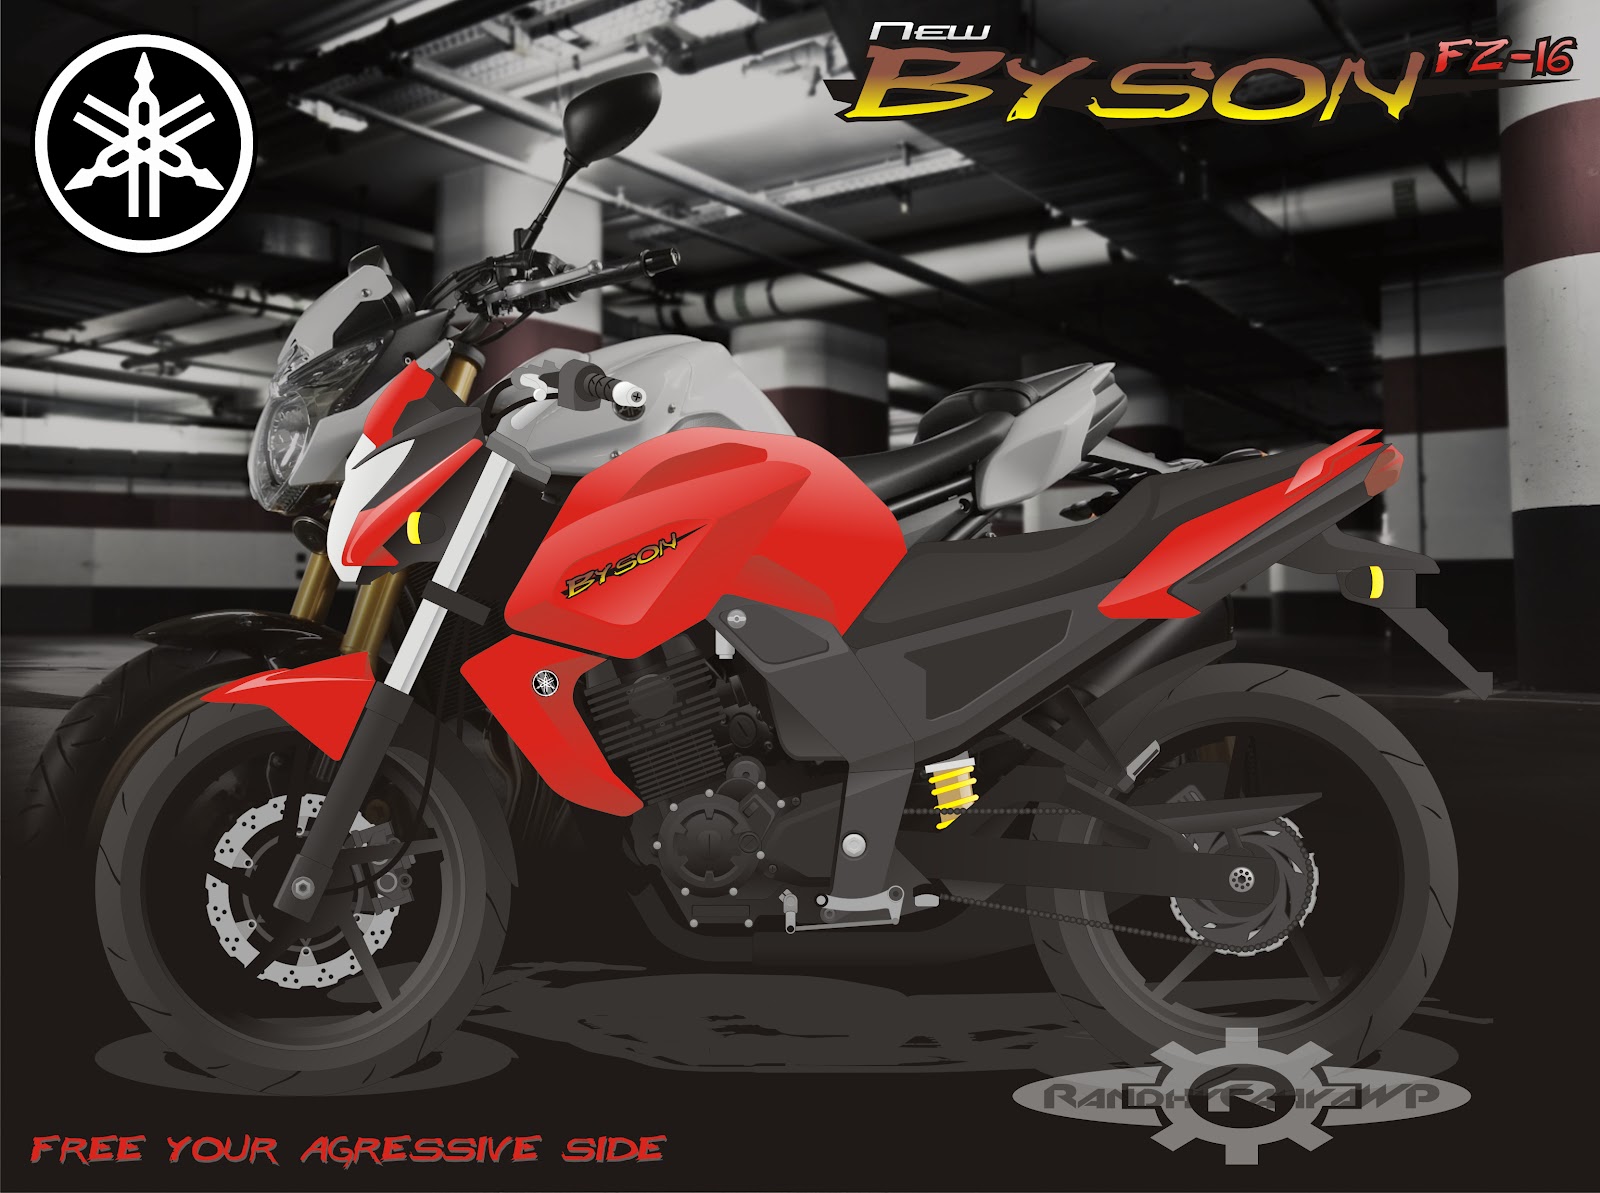 Spesifikasi Dan Harga Motor Yamaha Byson Terbaru Juli 2016 Dunia Motor